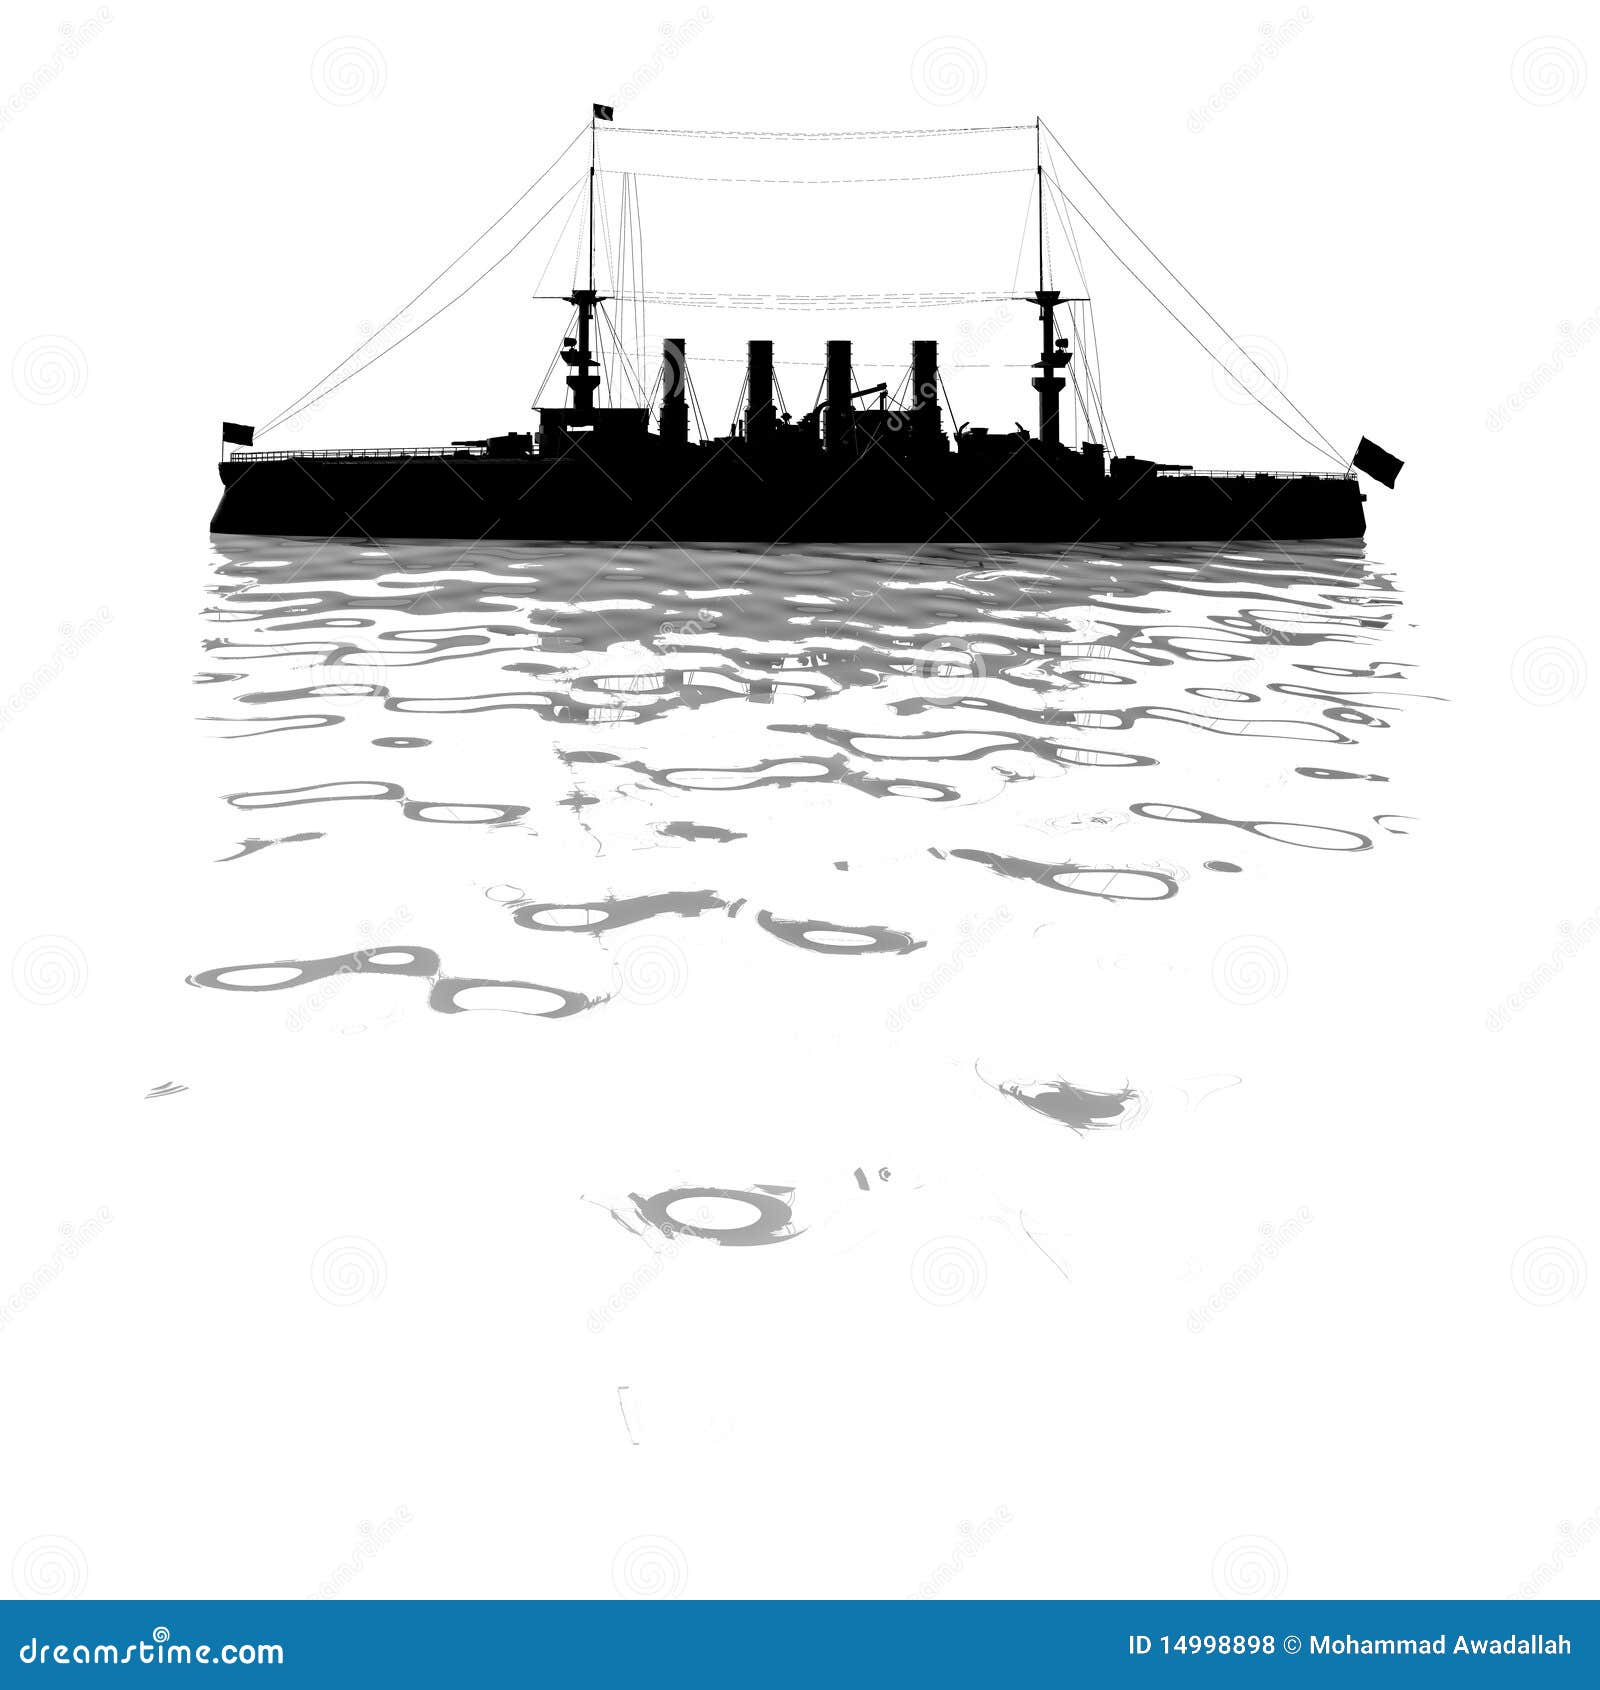 Sketch of battleship stock illustration. Illustration of navy - 14998898